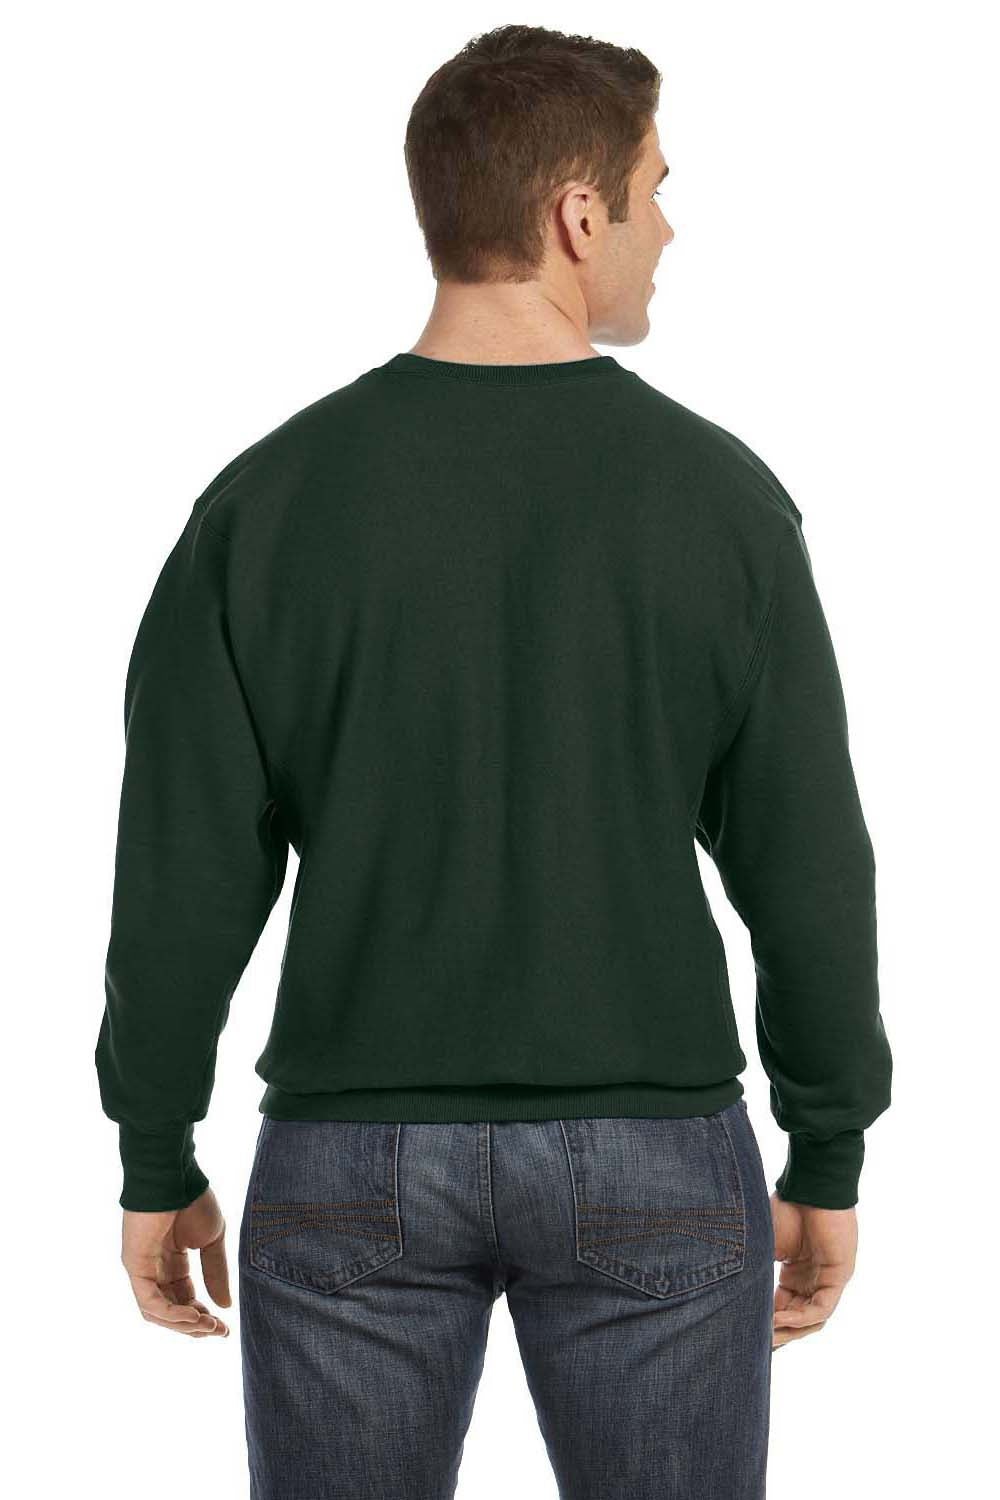 Champion S1049 Mens Crewneck Sweatshirt Dark Green Back